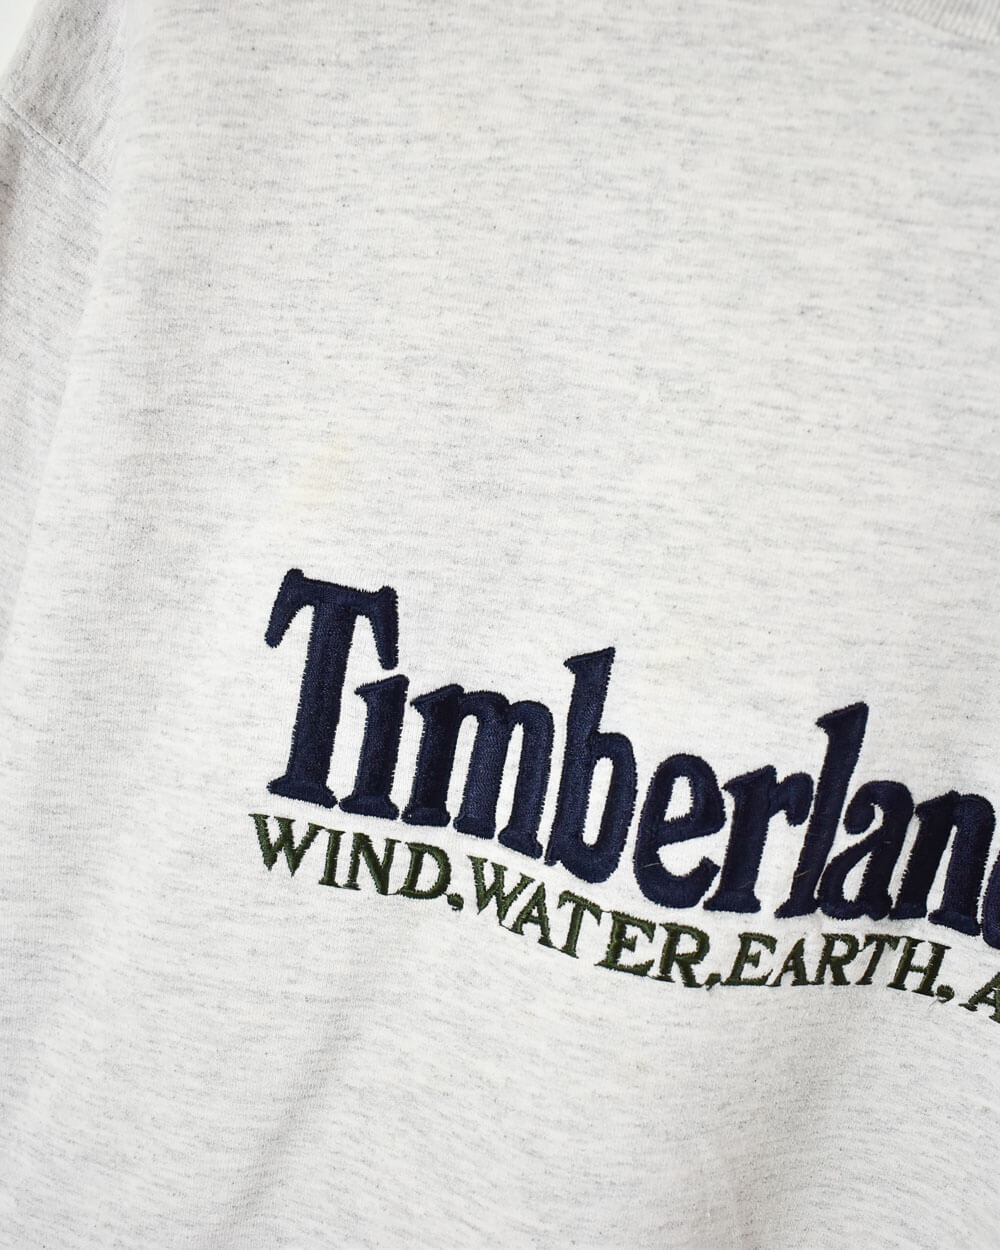 Stone Timberland Wind Water Earth and Sky Sweatshirt - X-Large